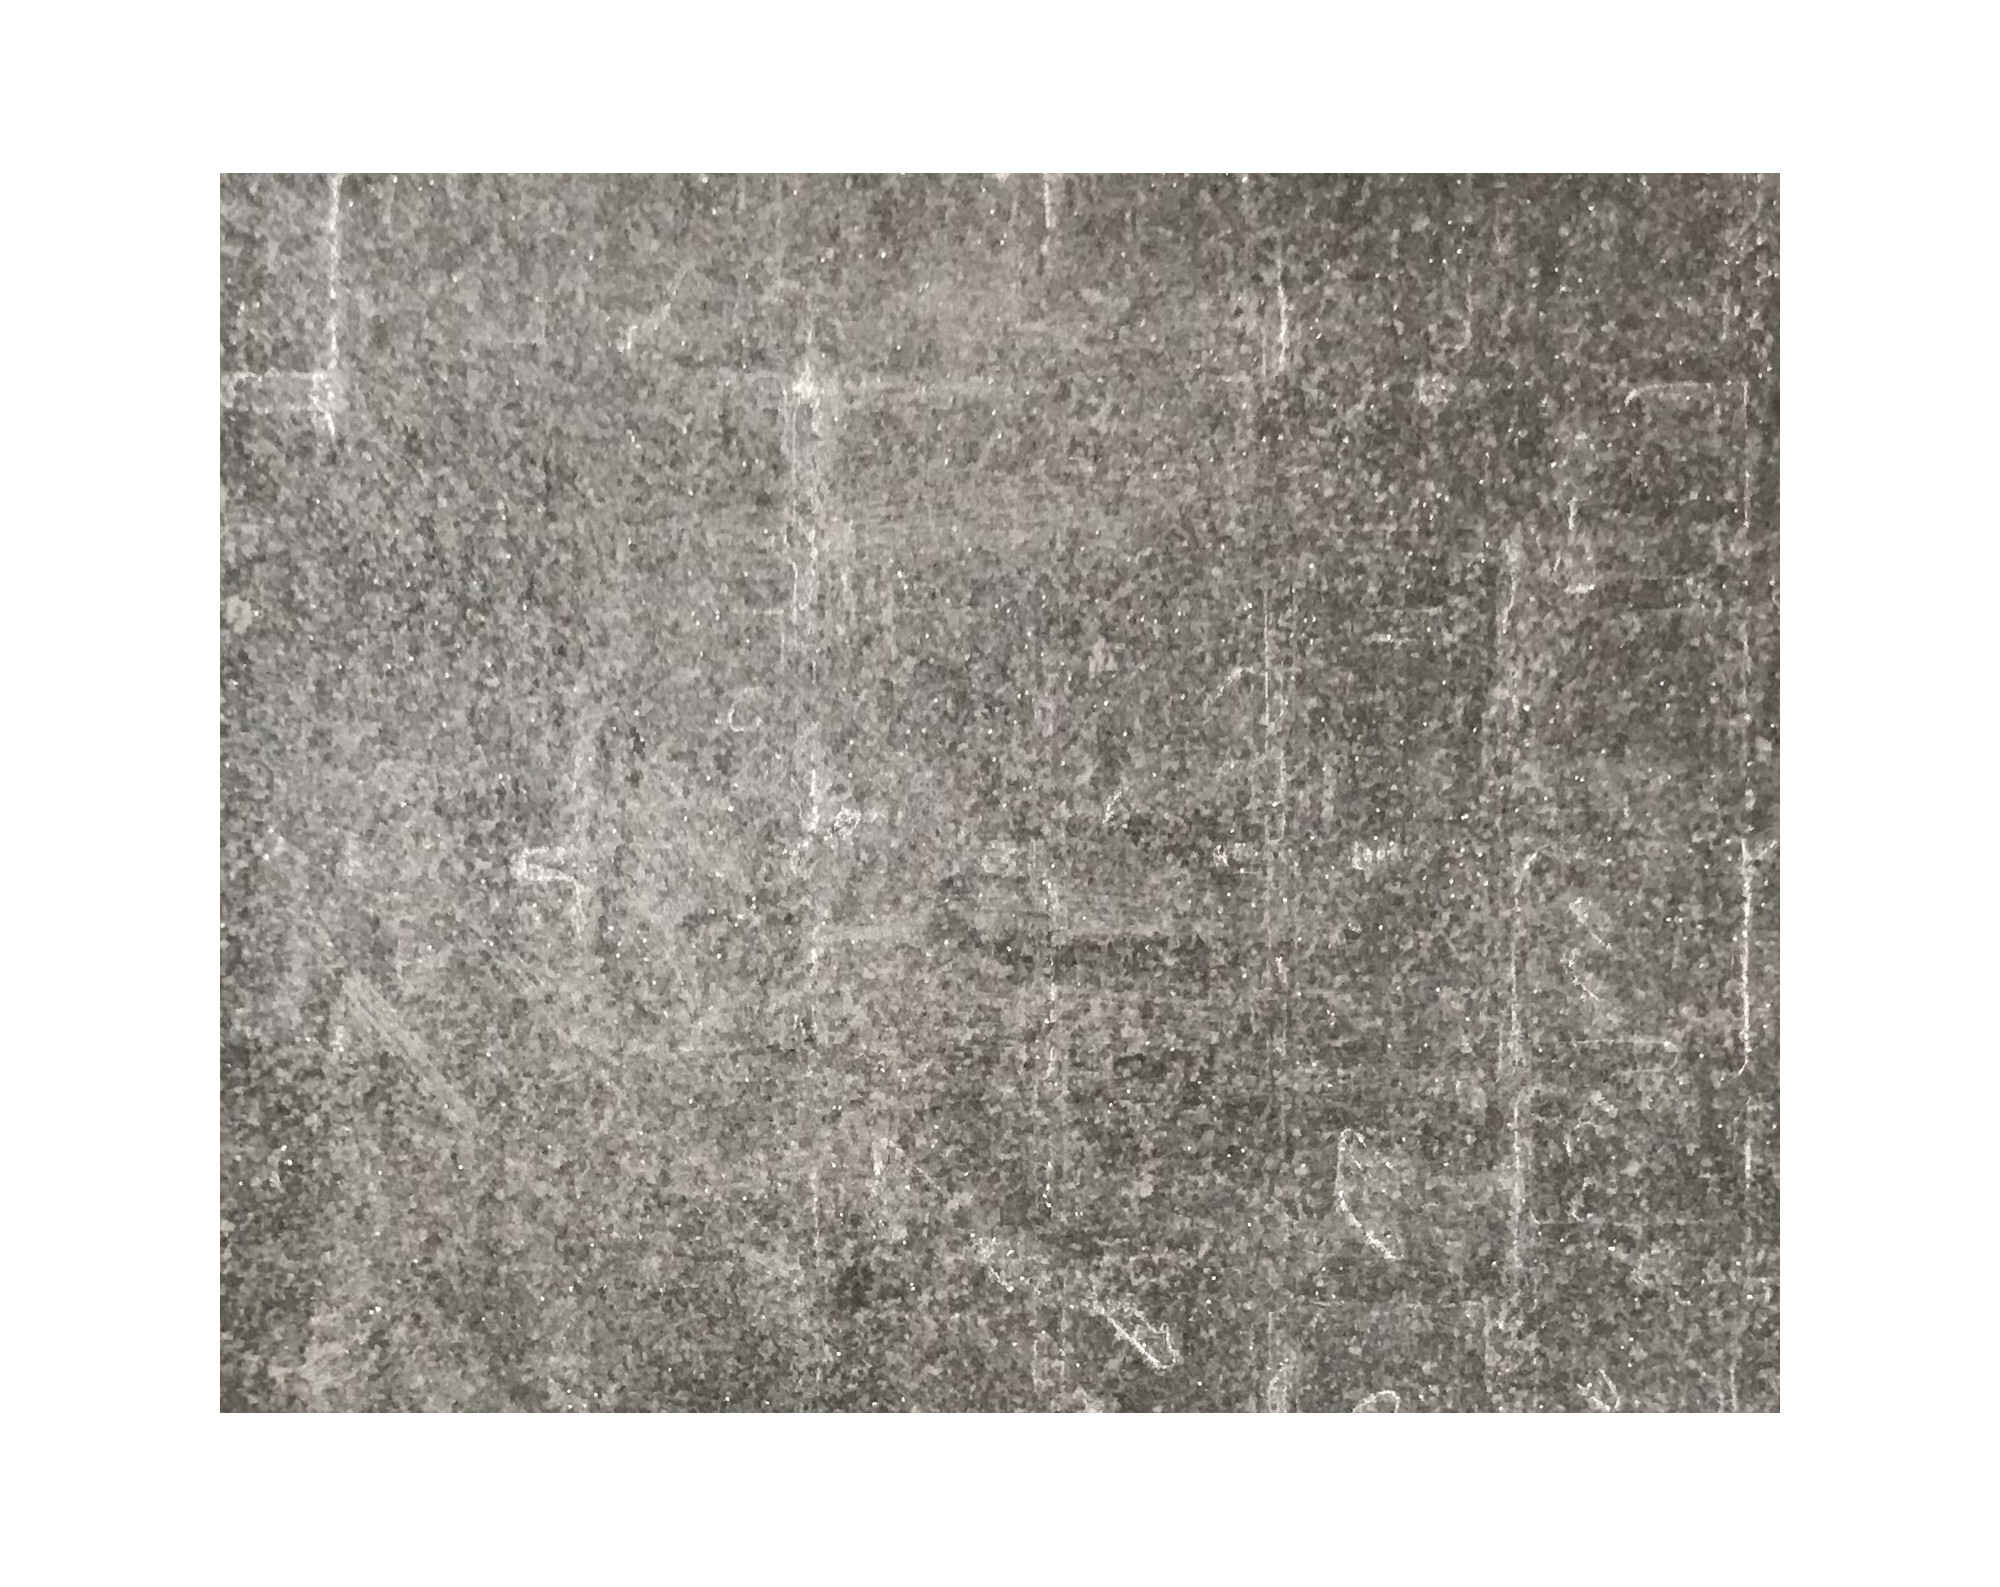 Harmo roc maranelloset, keramiek-serie, 8-vormig d:6,00mx9,20m, zand zwart, keramisch porselein